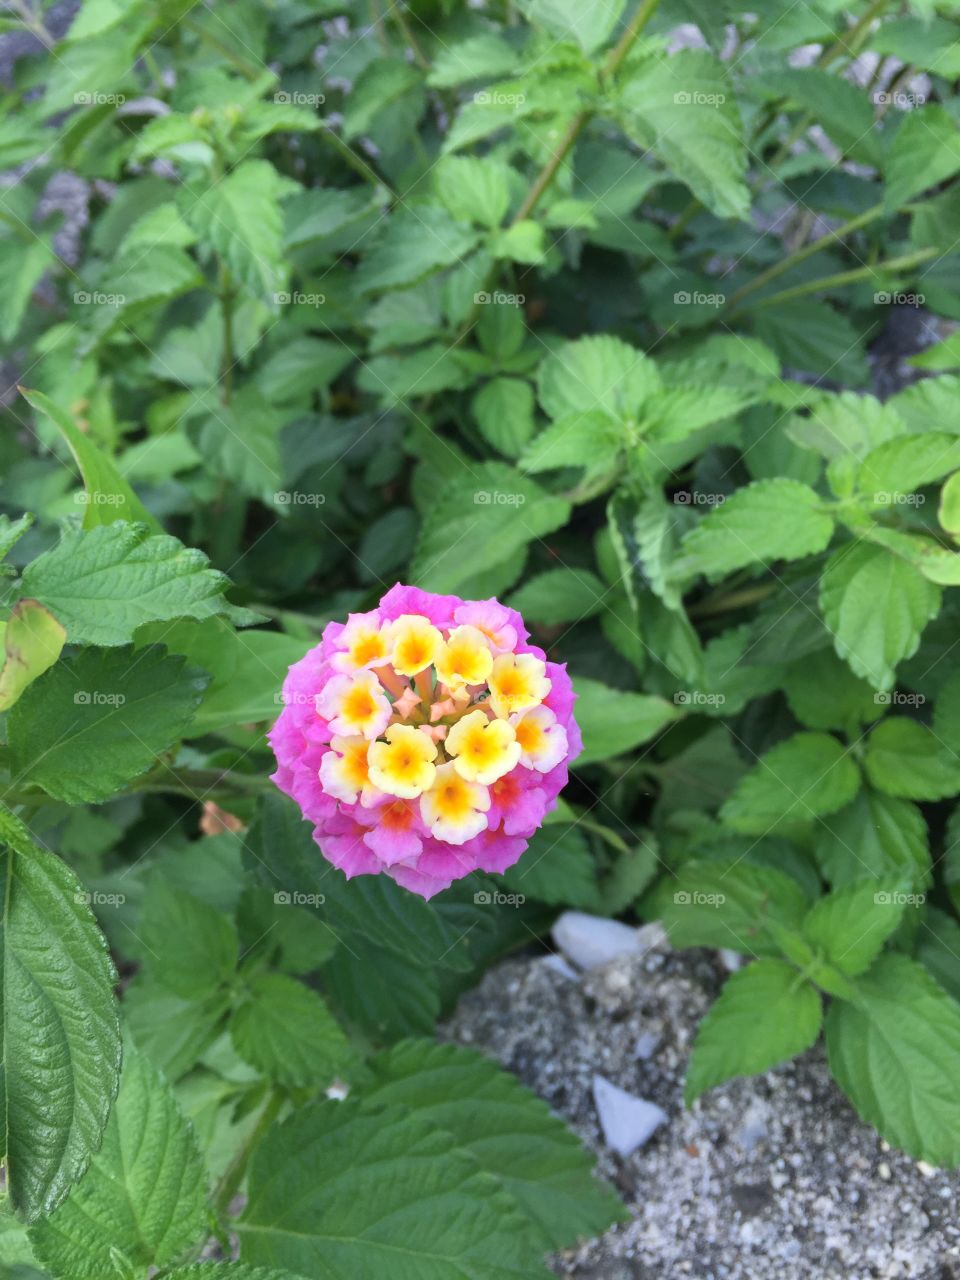 Flowers found while walking in Yakushima